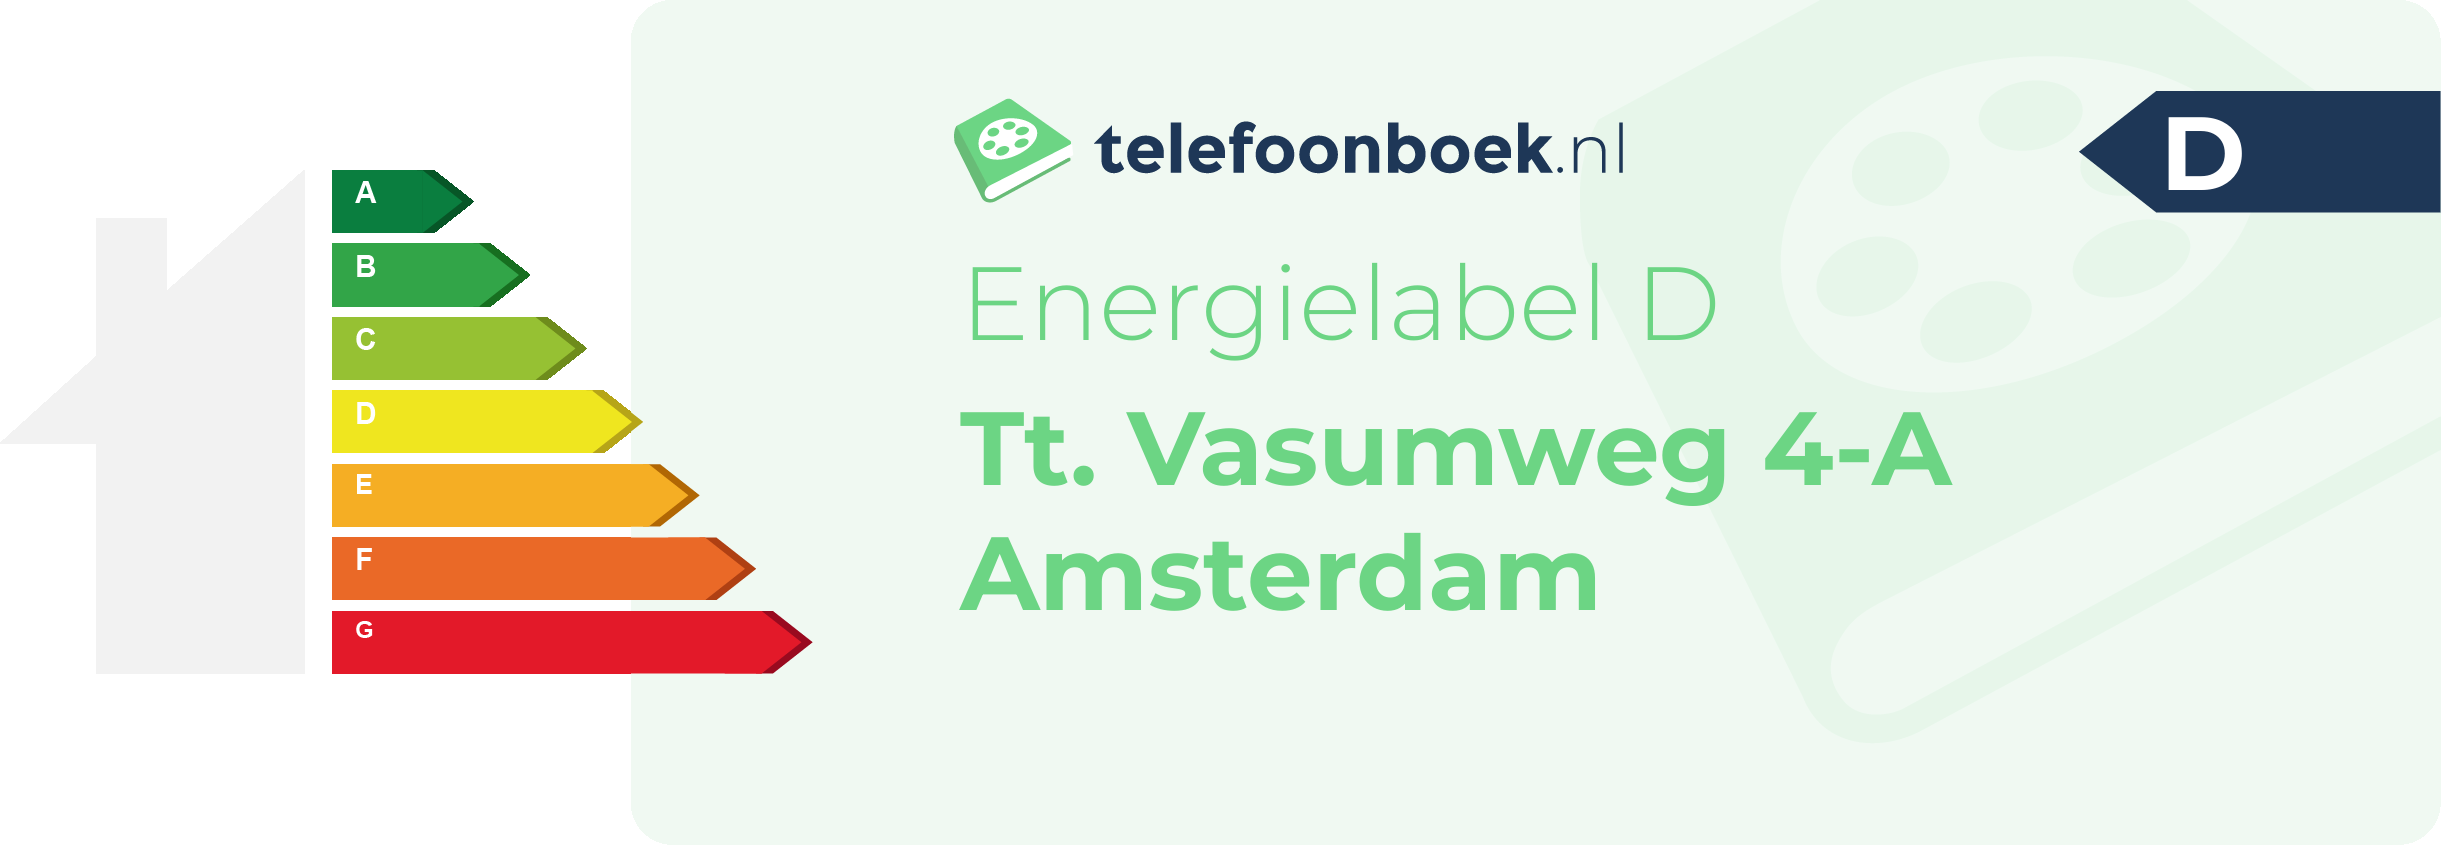 Energielabel Tt. Vasumweg 4-A Amsterdam